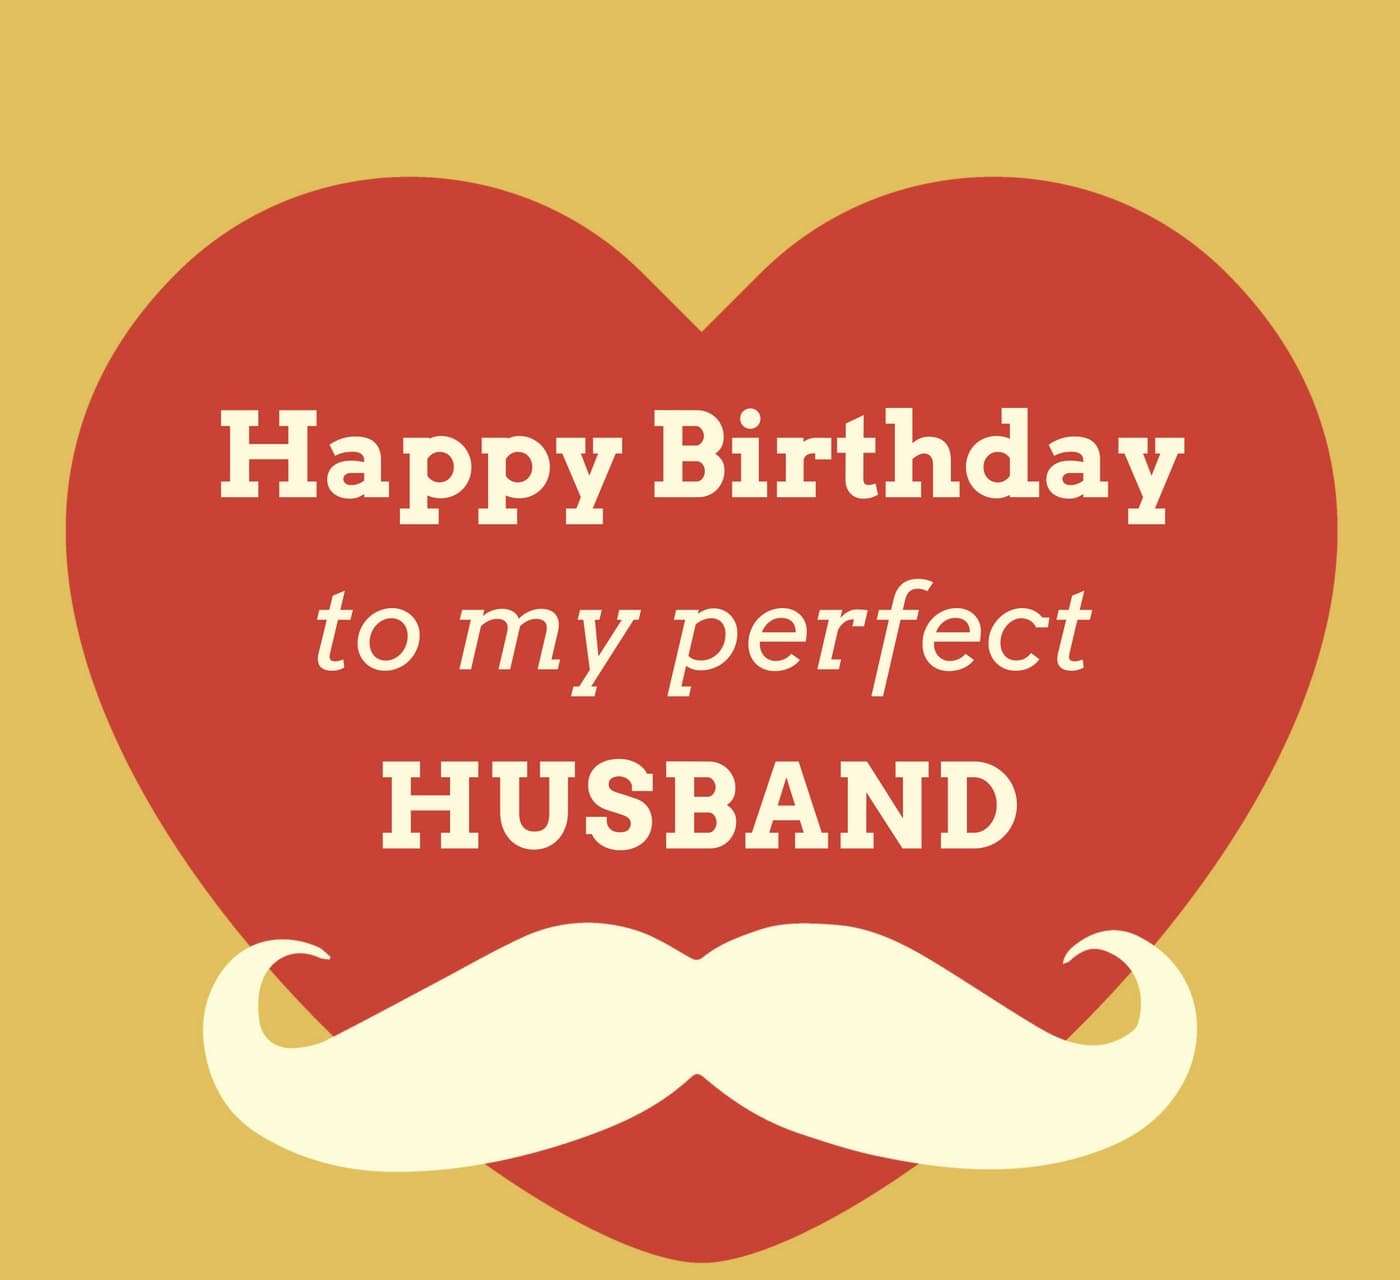 54 Free Happy Birthday Husband Images